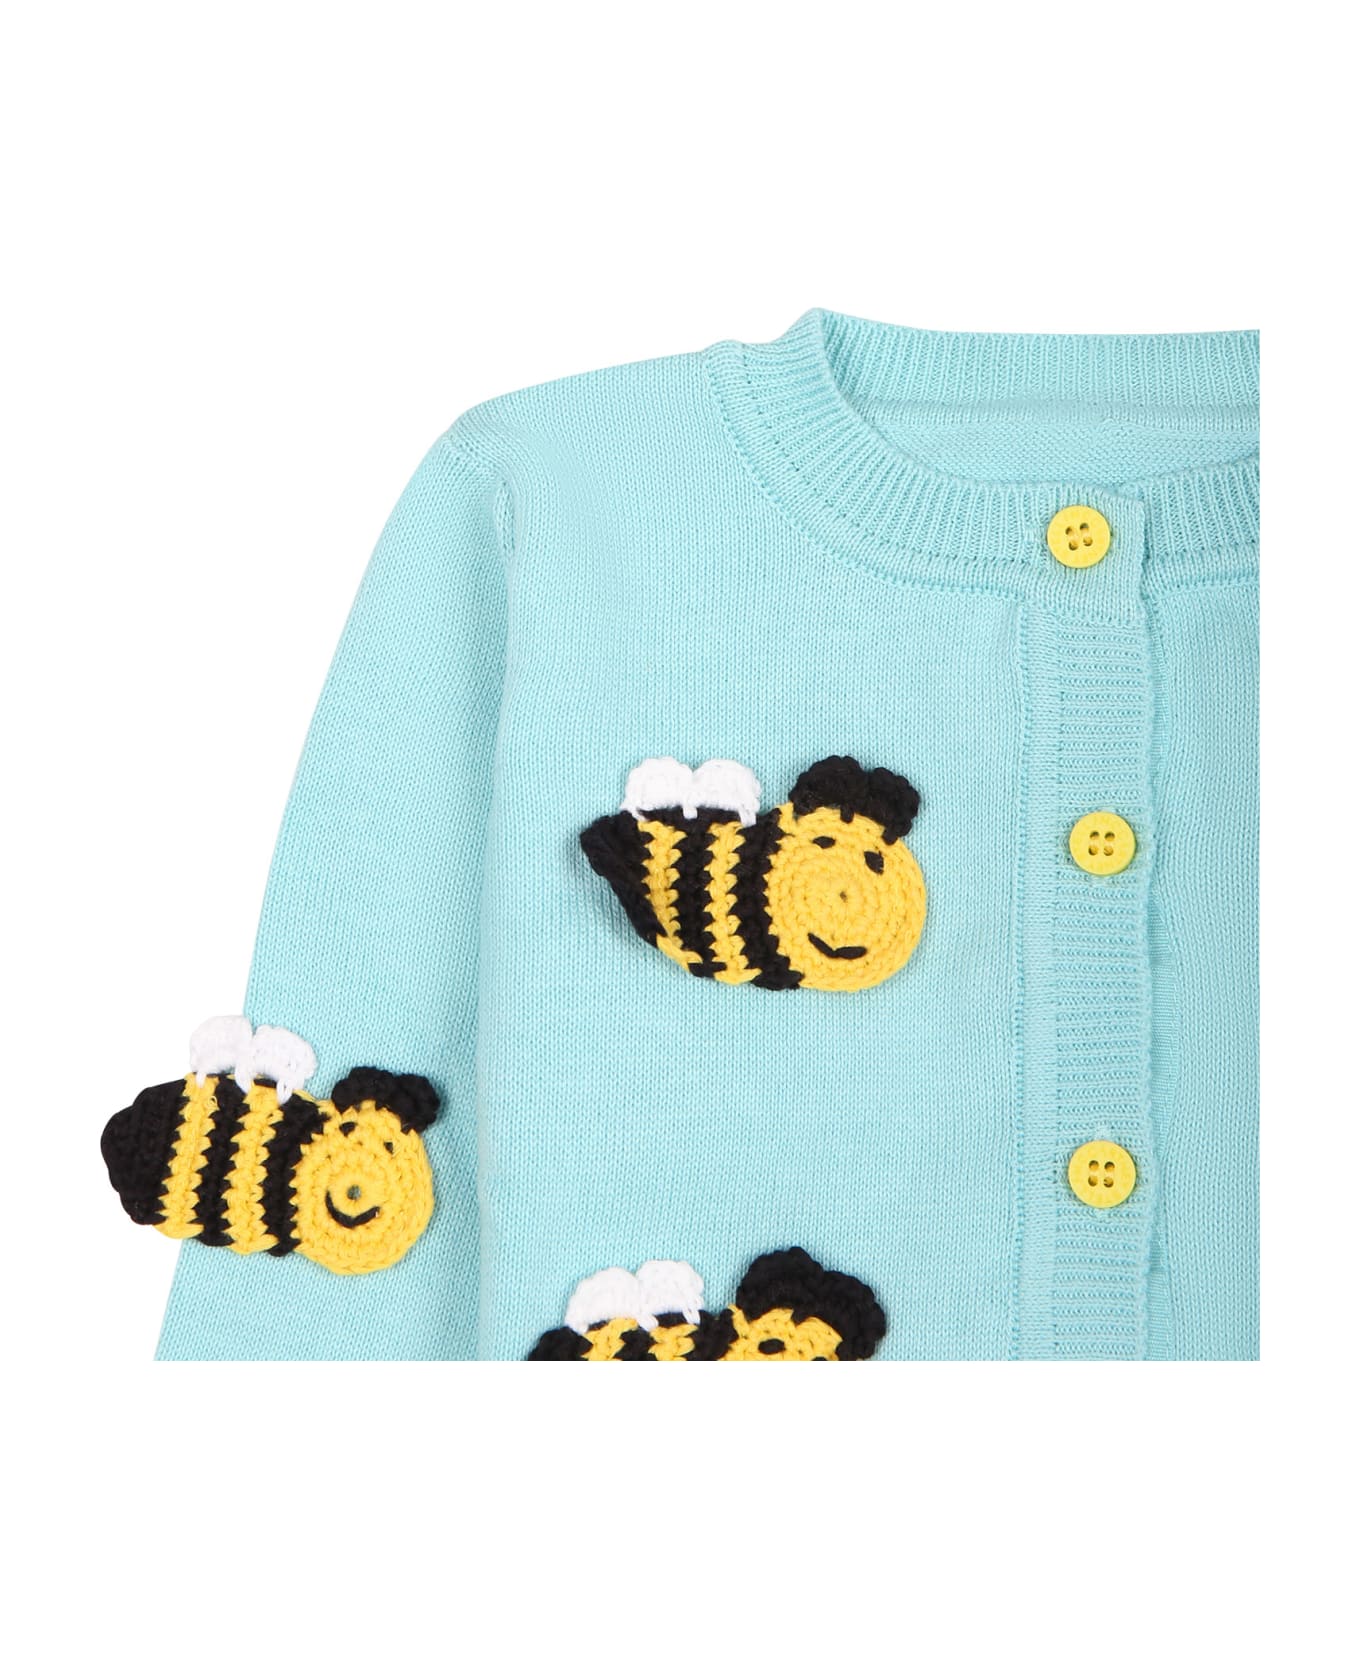 Stella McCartney Kids Light Blue Cardigan For Baby Girl With Bees - Celeste